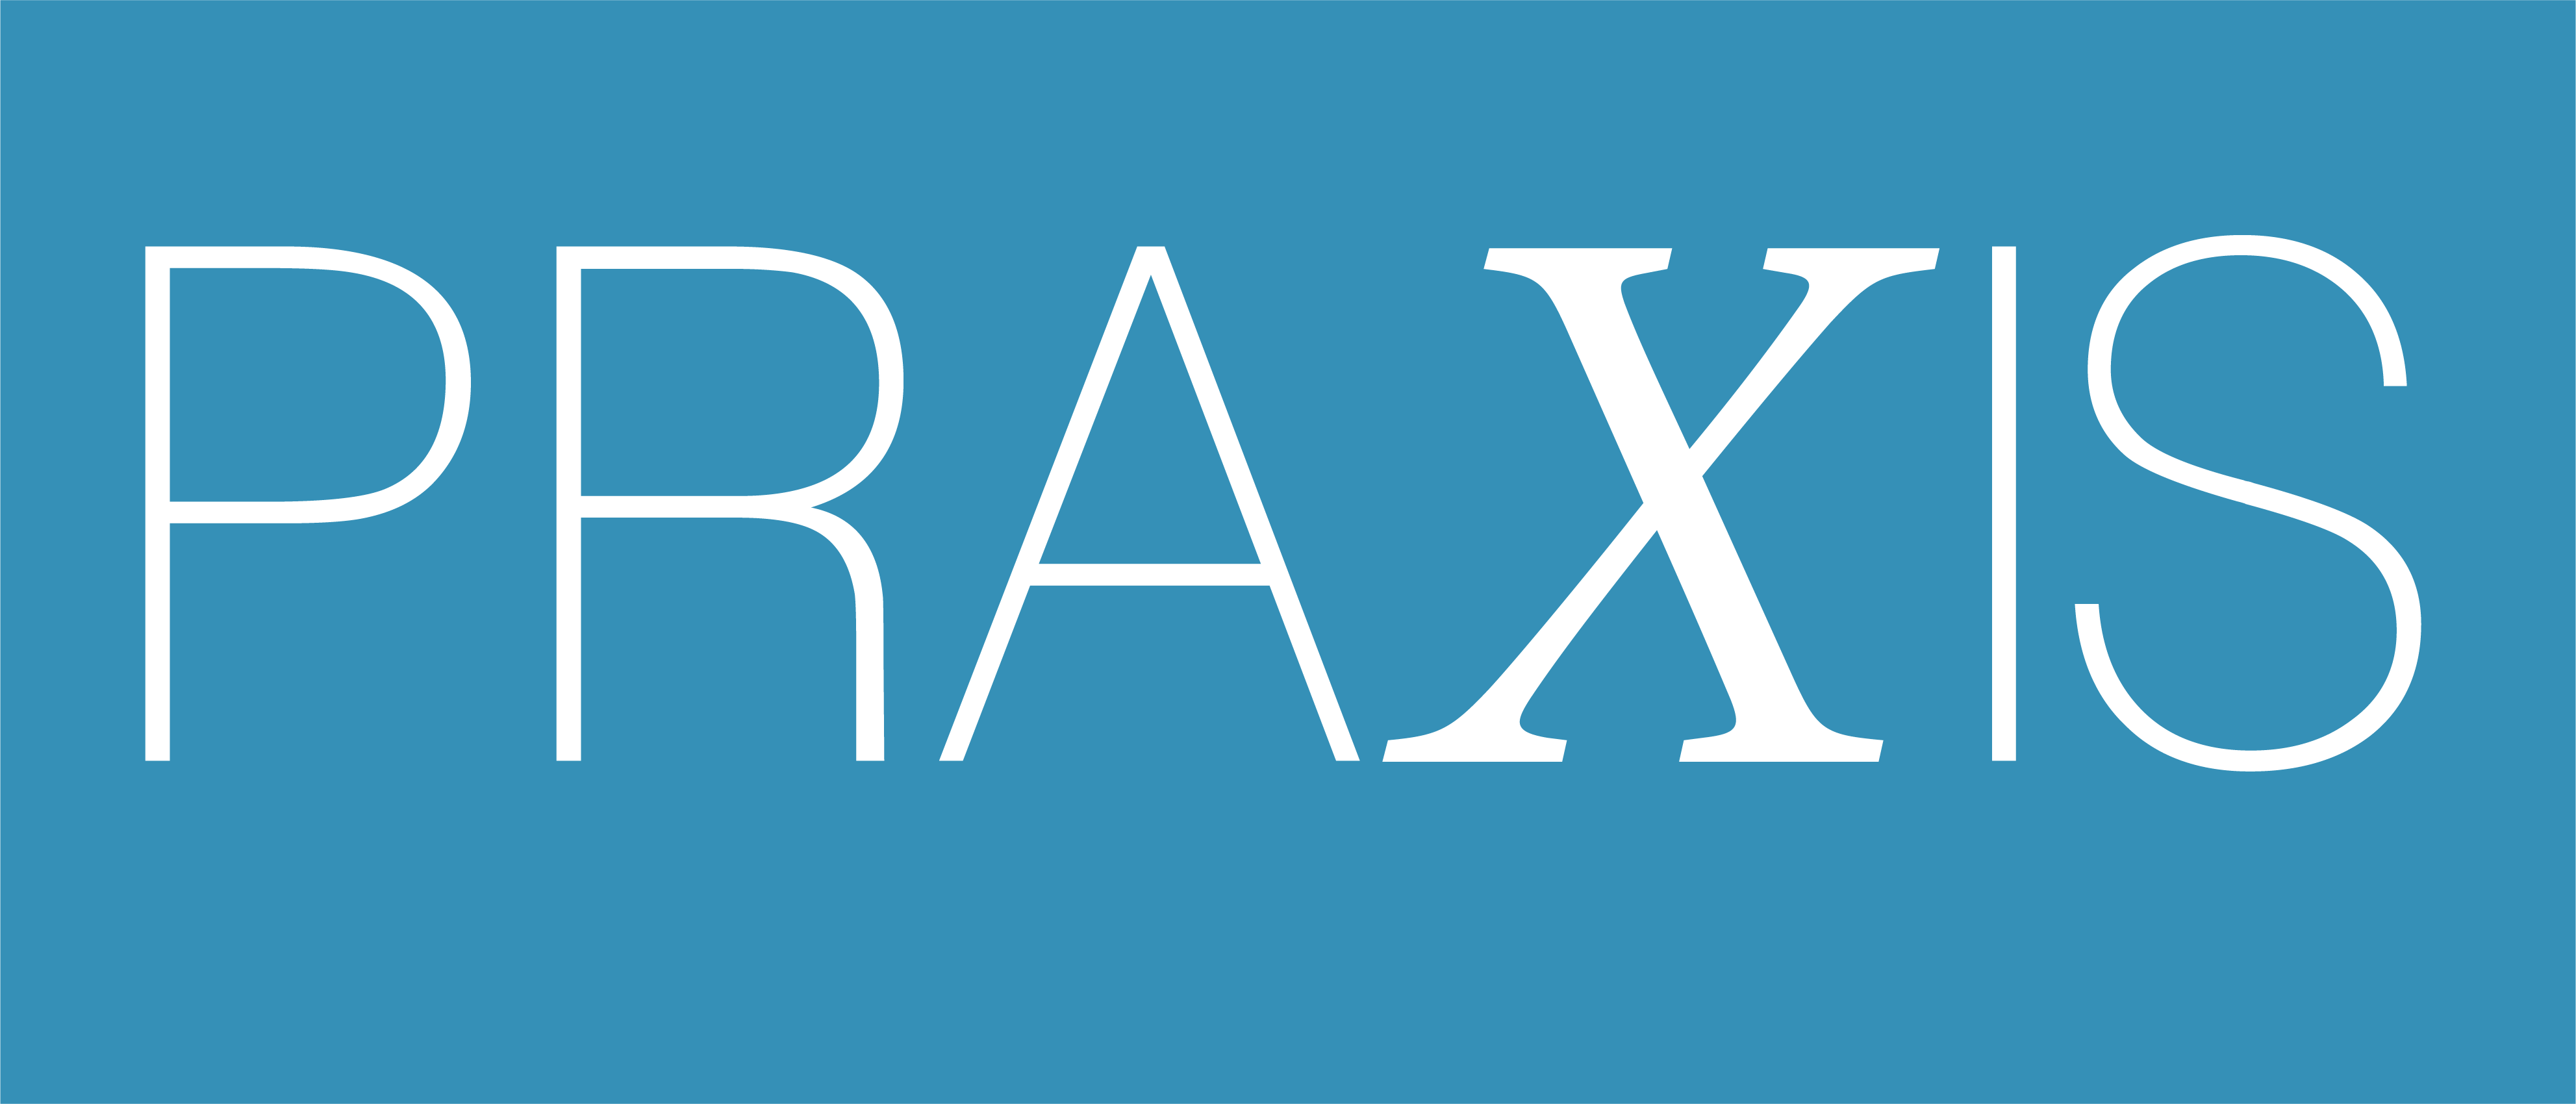 Praxis Logo - Terms of use - Praxis